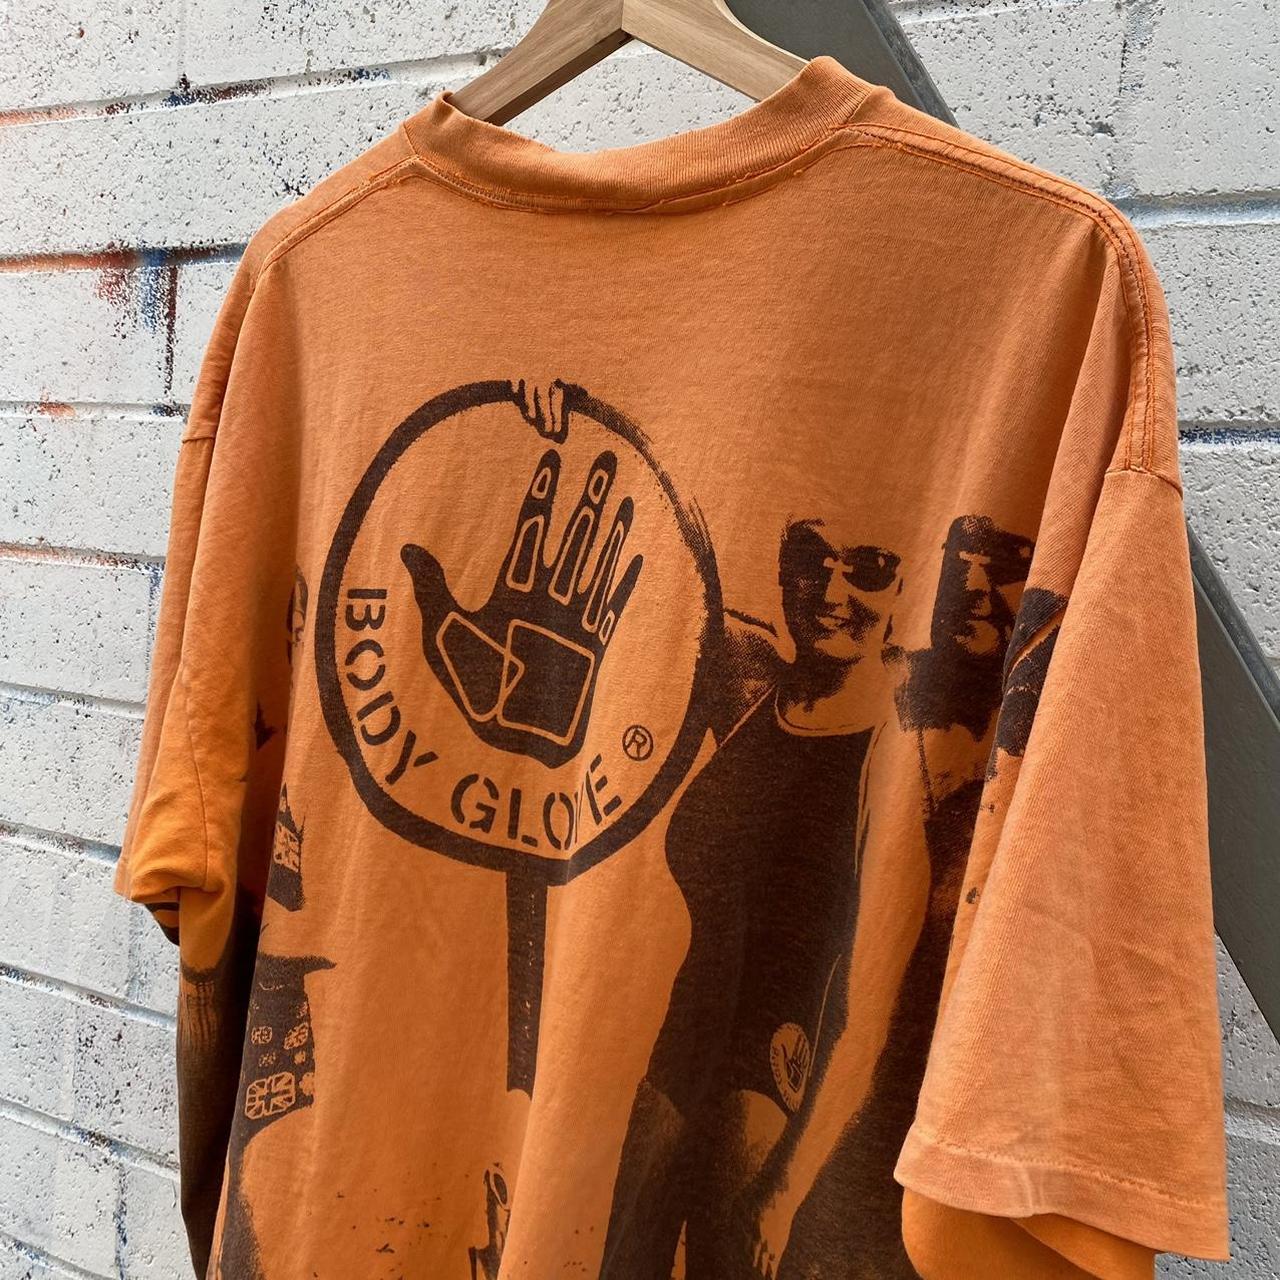 Body Glove Men's Orange T-shirt (5)